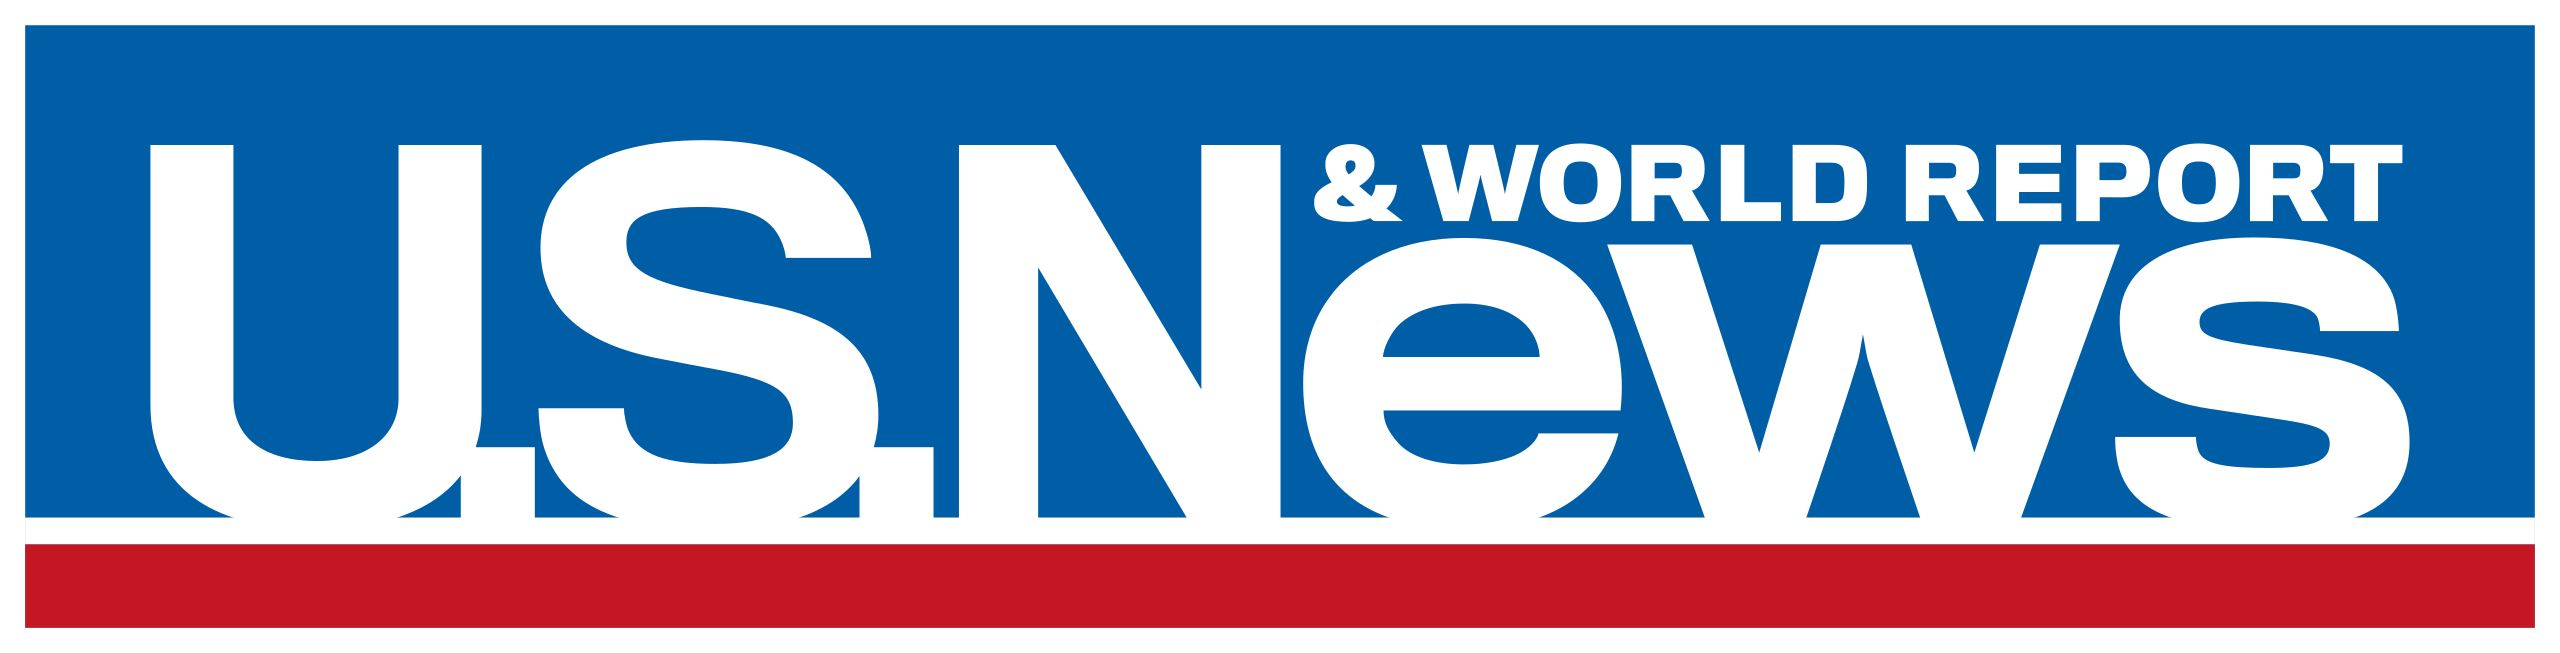 U.S. News World Report logo.svg Cut My City